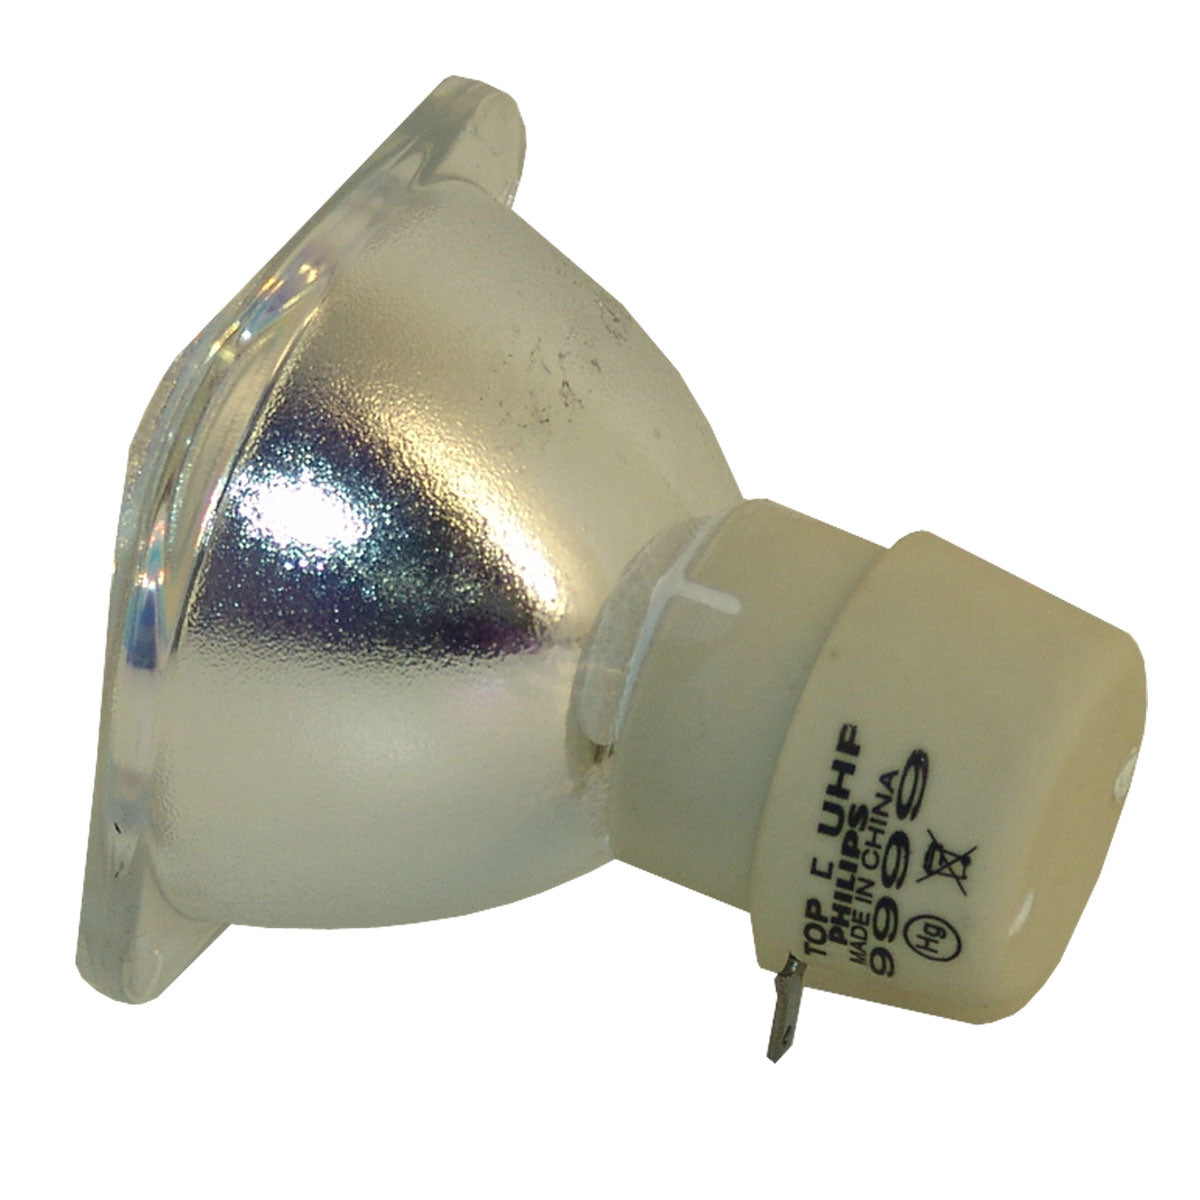 Sanyo POA-LMP118 Philips Projector Bare Lamp